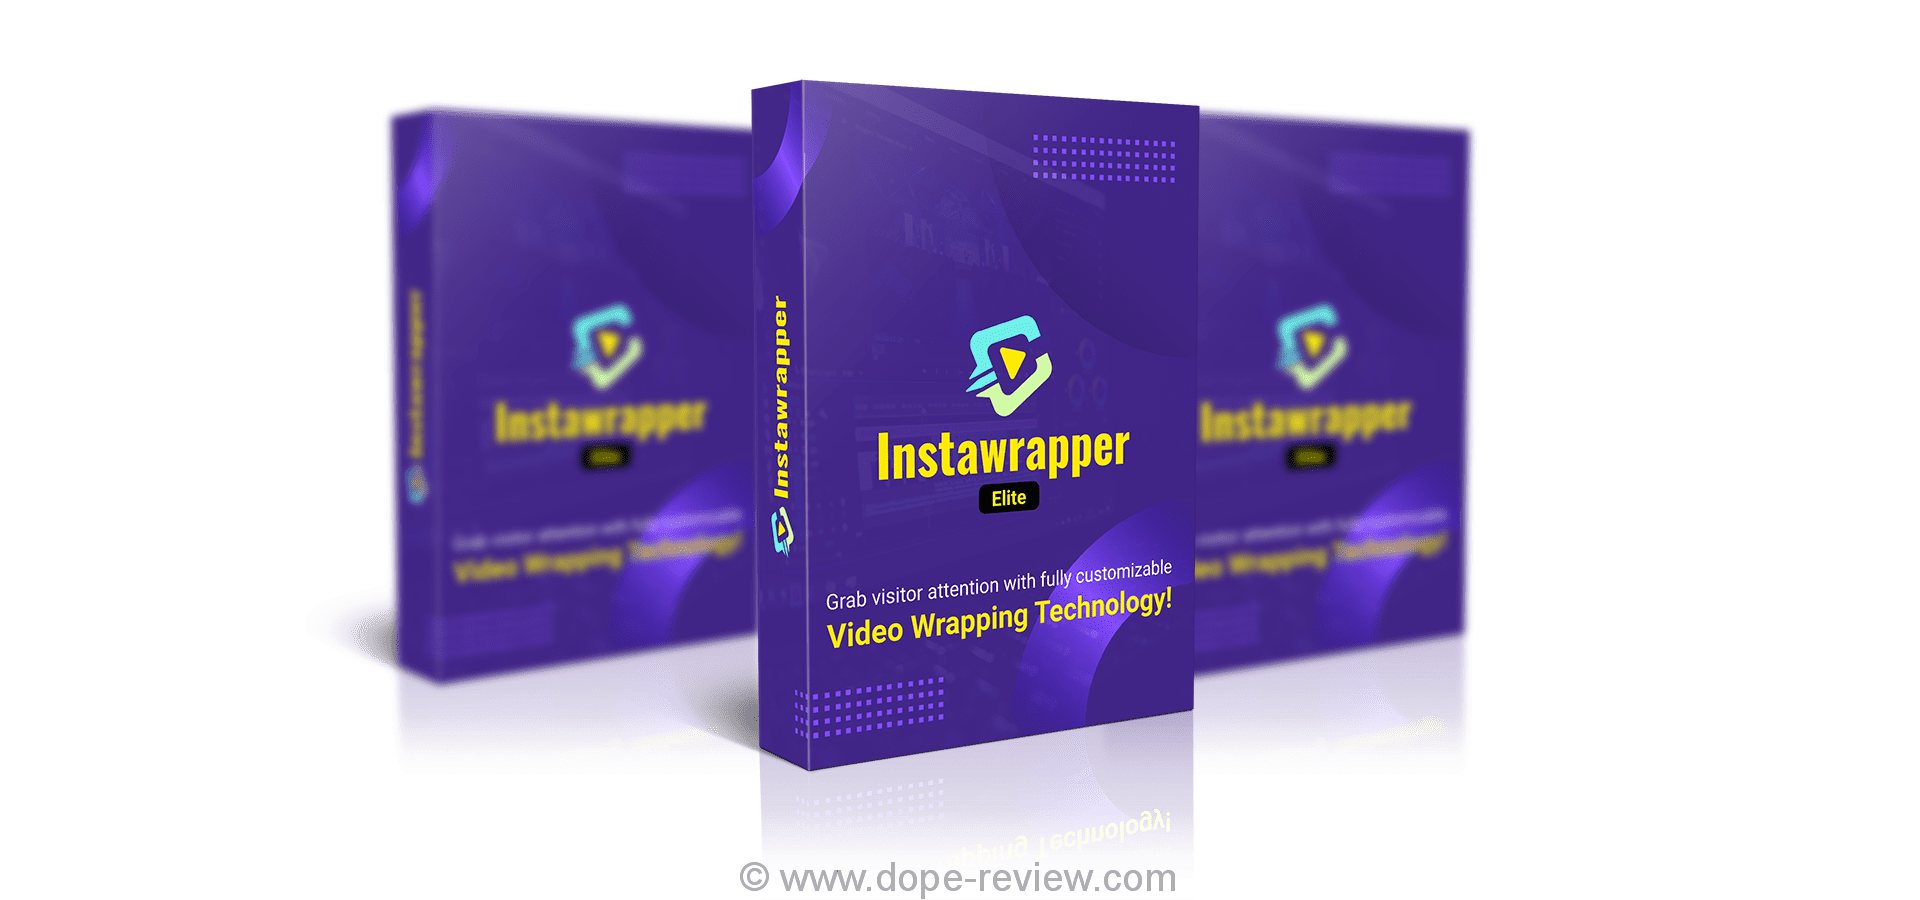 Instawrapper Review